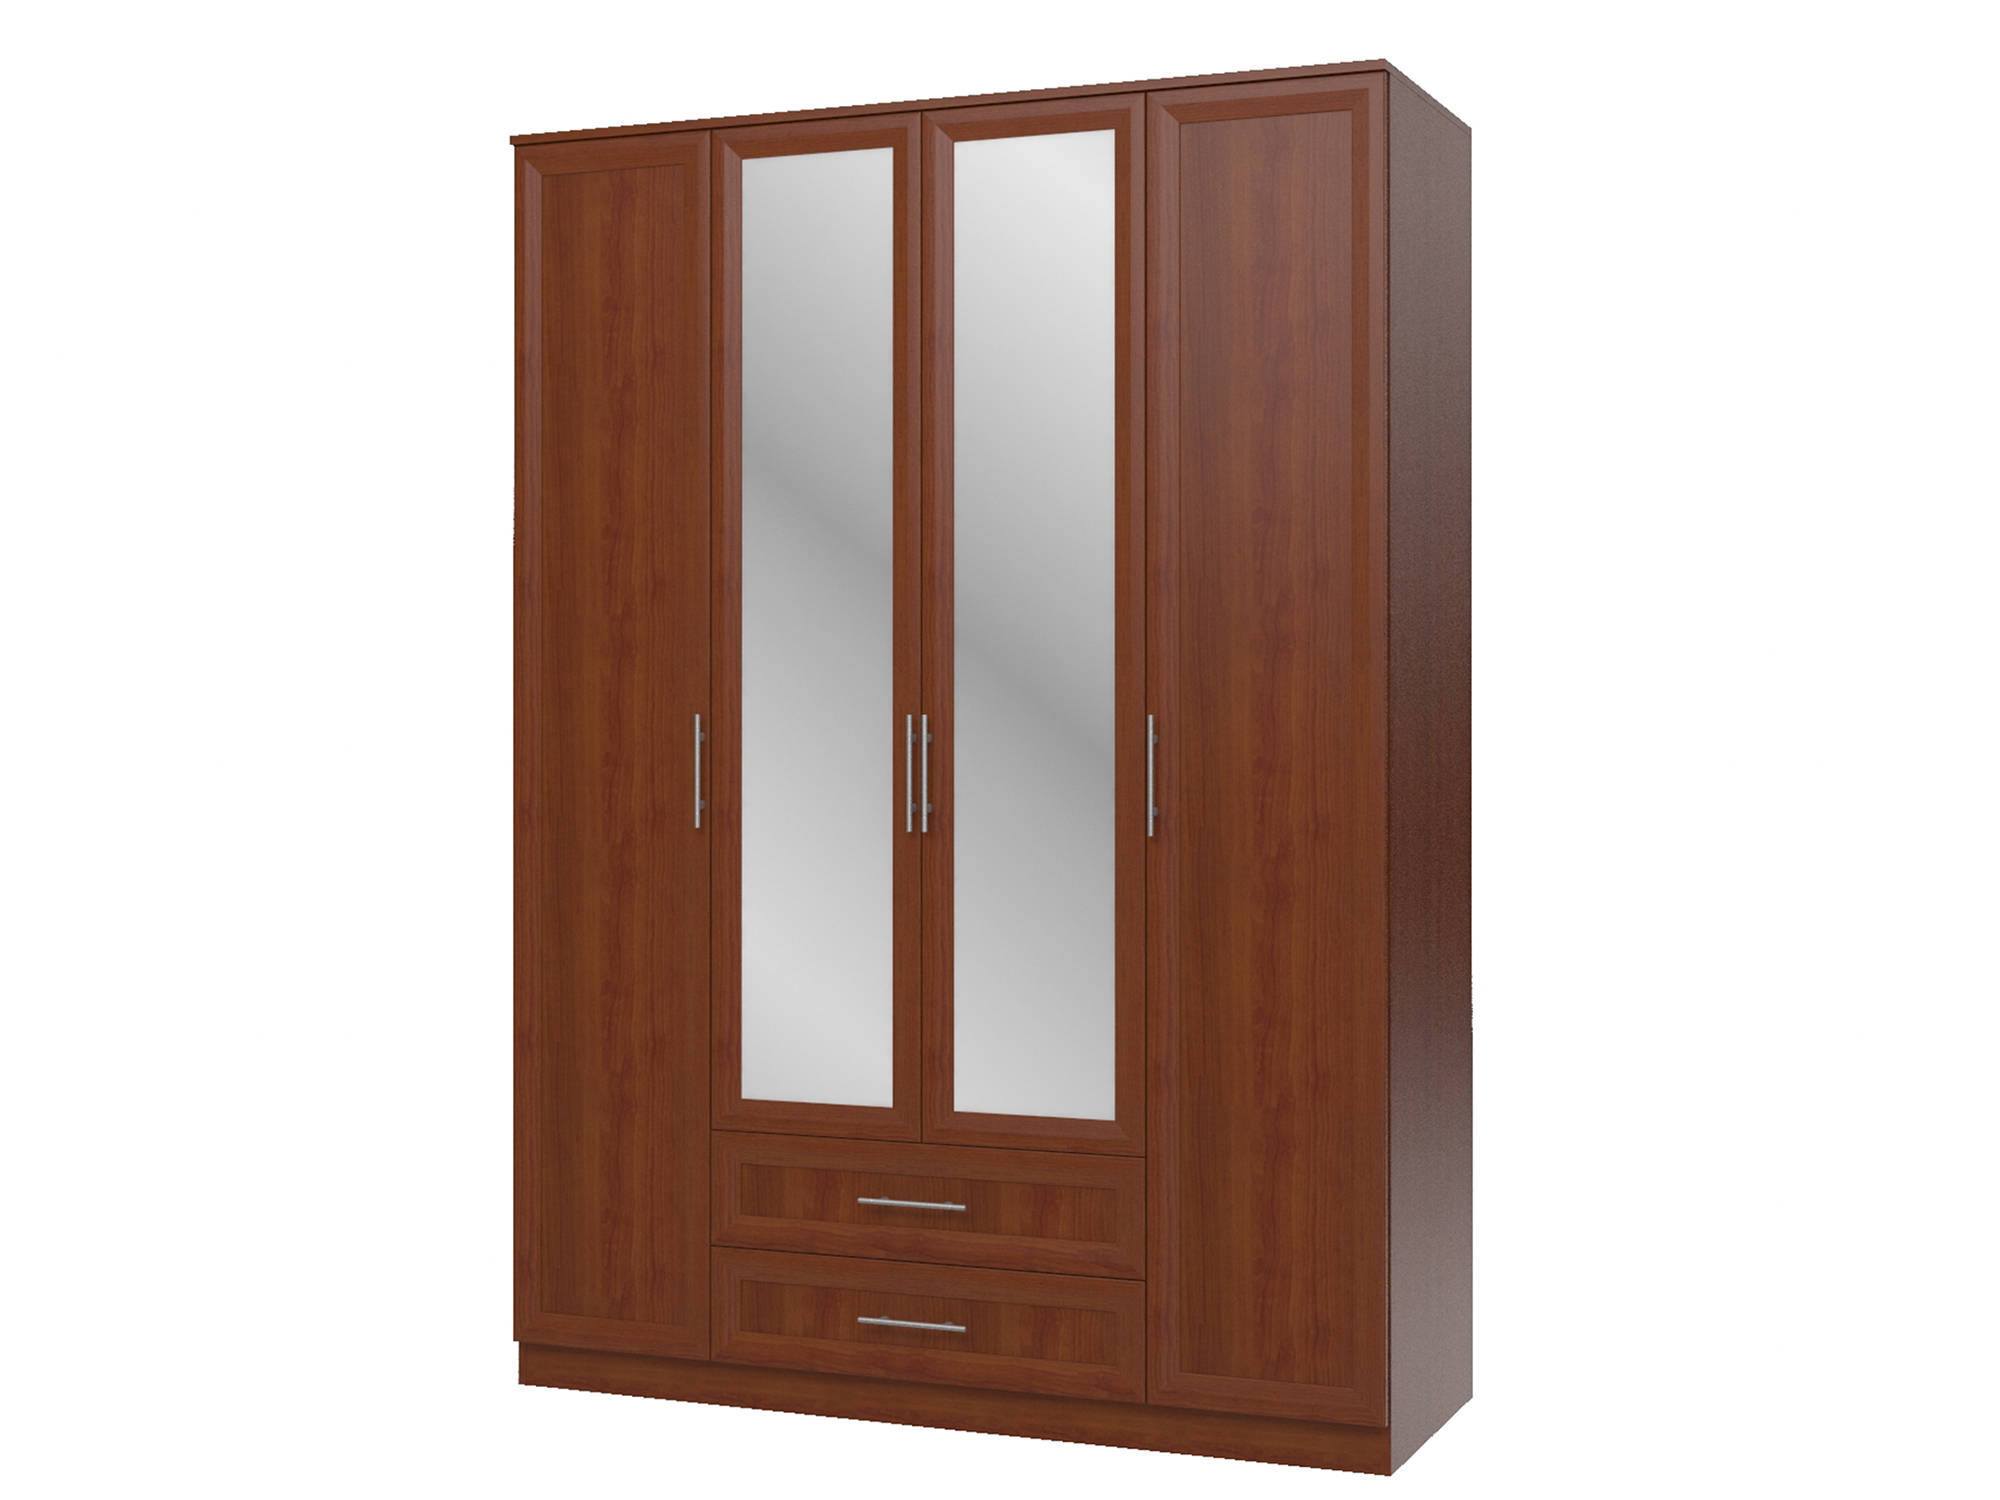 Шкаф 4-х дверный с зеркалами Юлианна Вишня барселона, Коричневый, КДСП, Зеркало шкаф 1 дверный юлианна вишня барселона коричневый кдсп